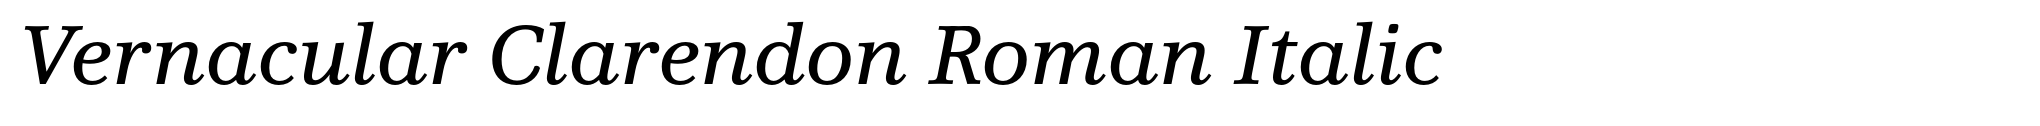 Vernacular Clarendon Roman Italic image